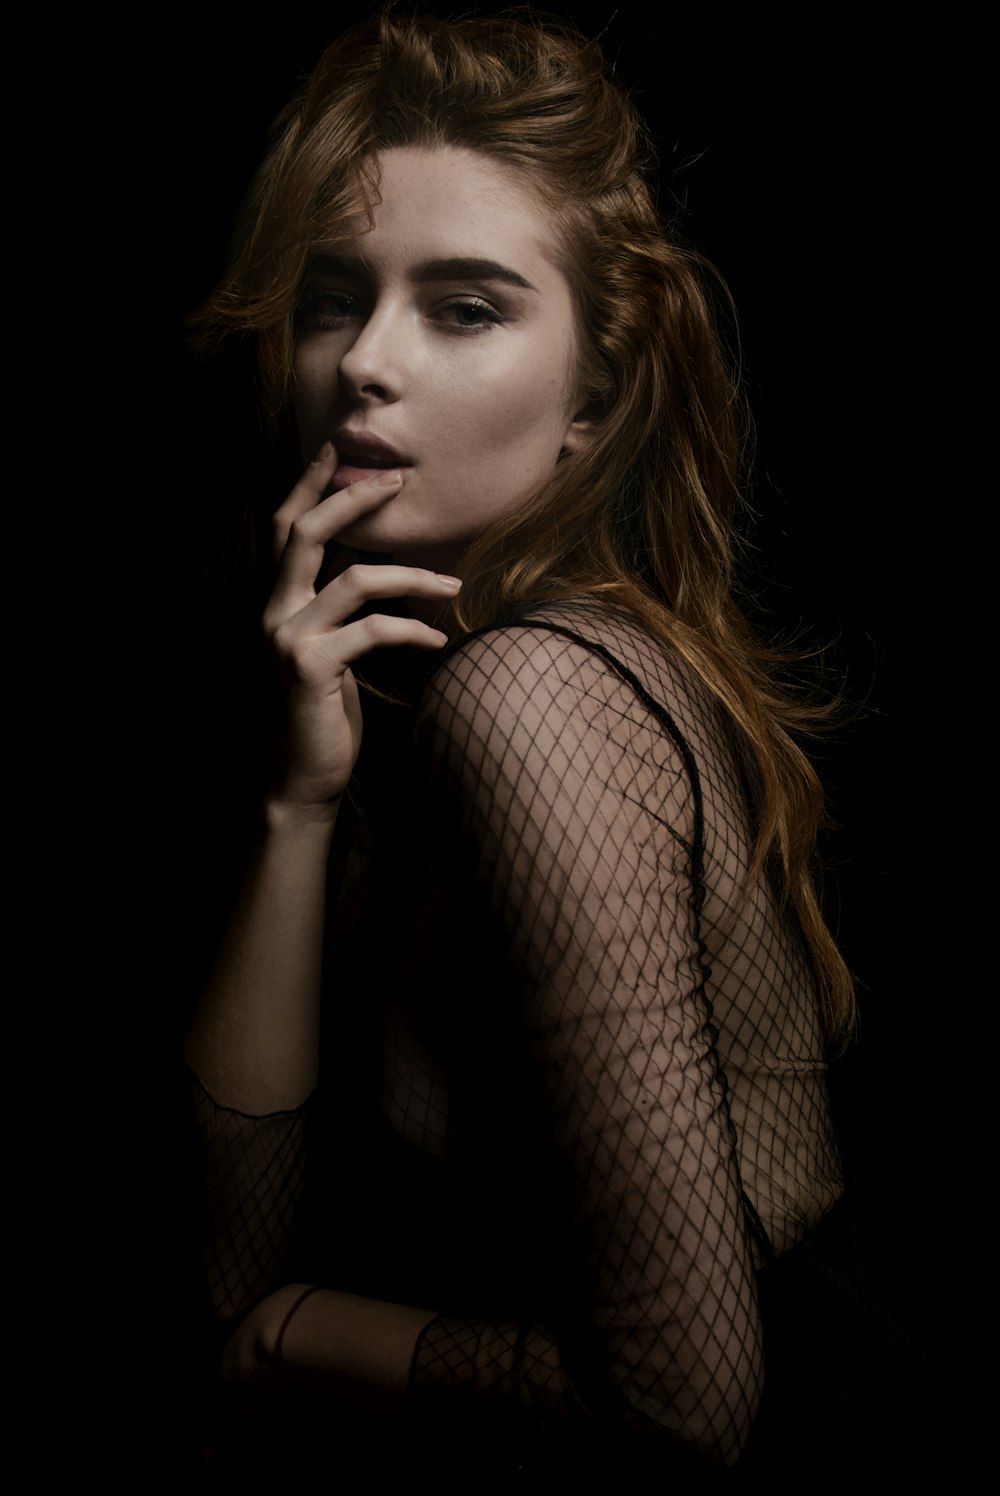 a woman in a fishnet dress smoking a cigarette